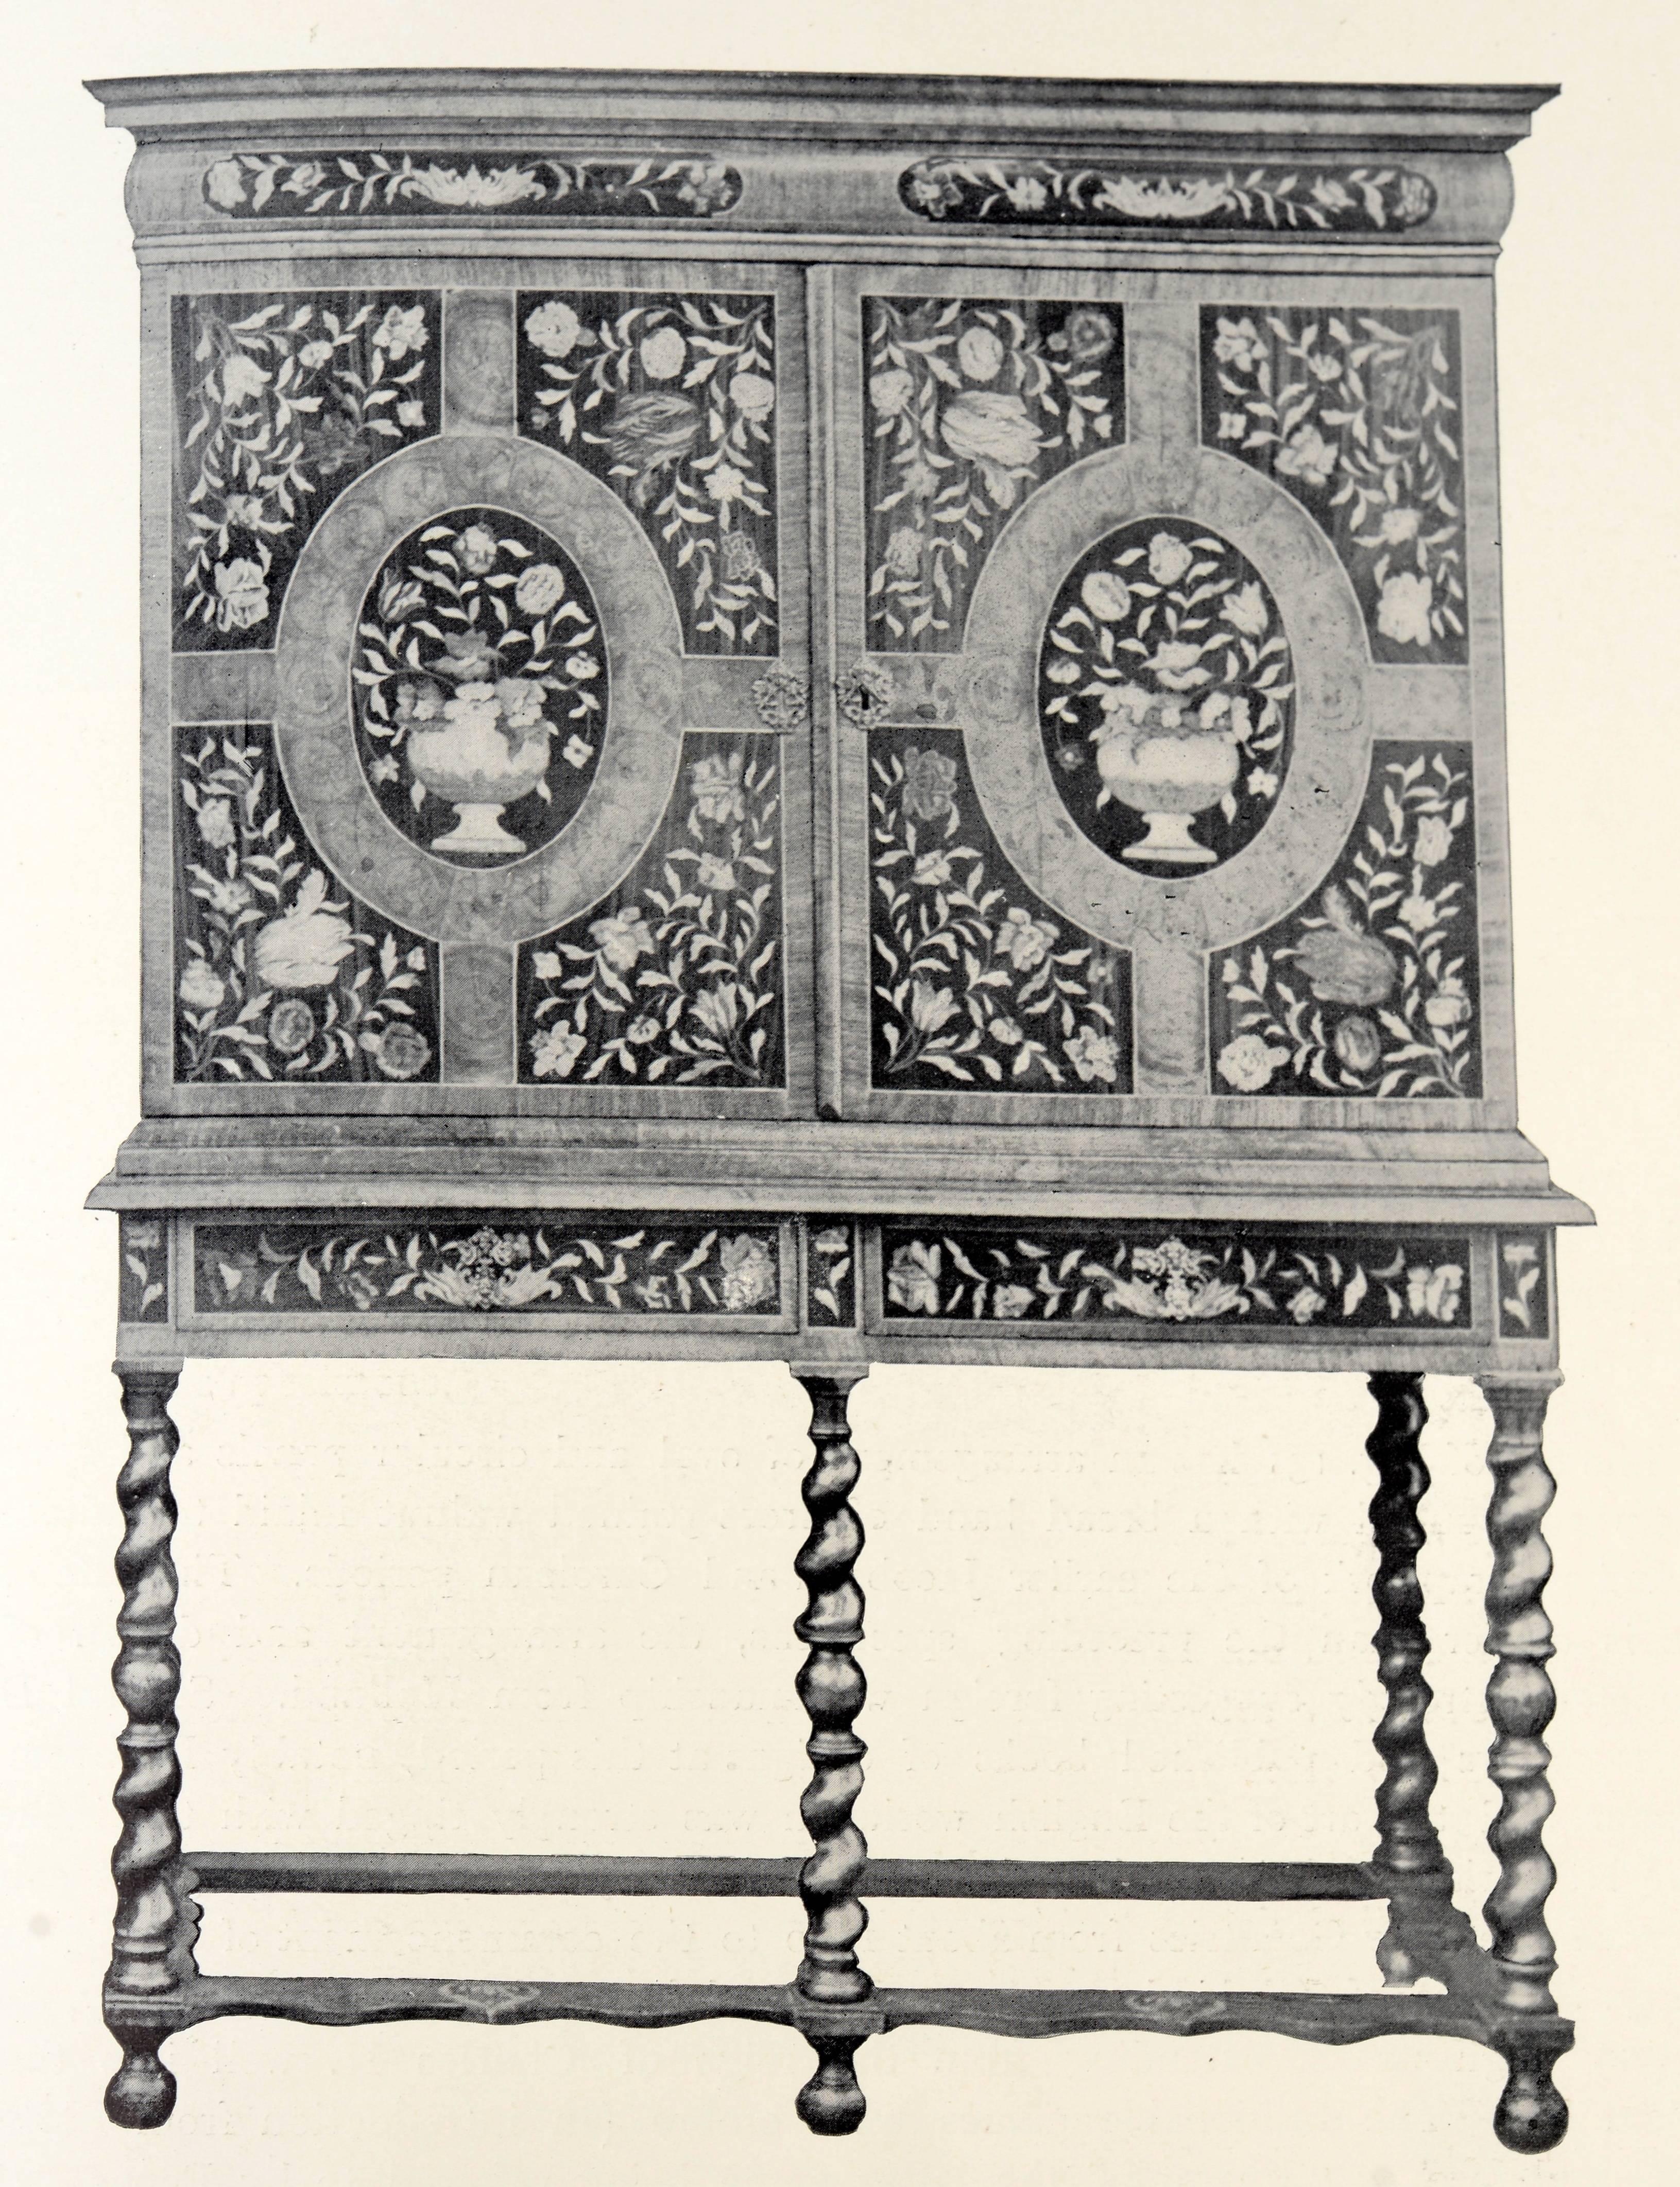 18th century english furniture